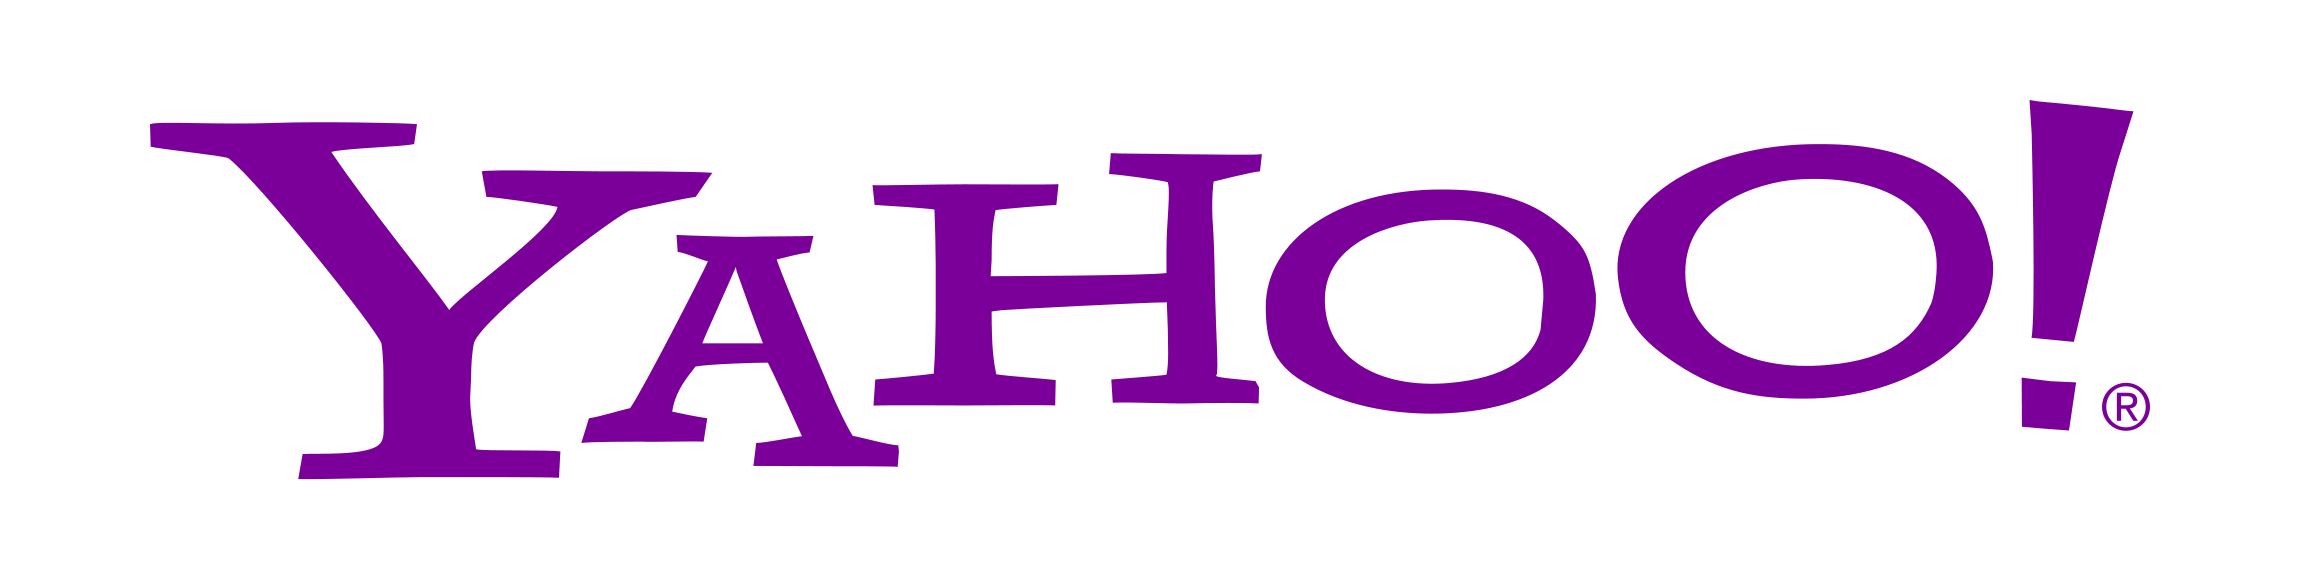 Image result for yahoo logo